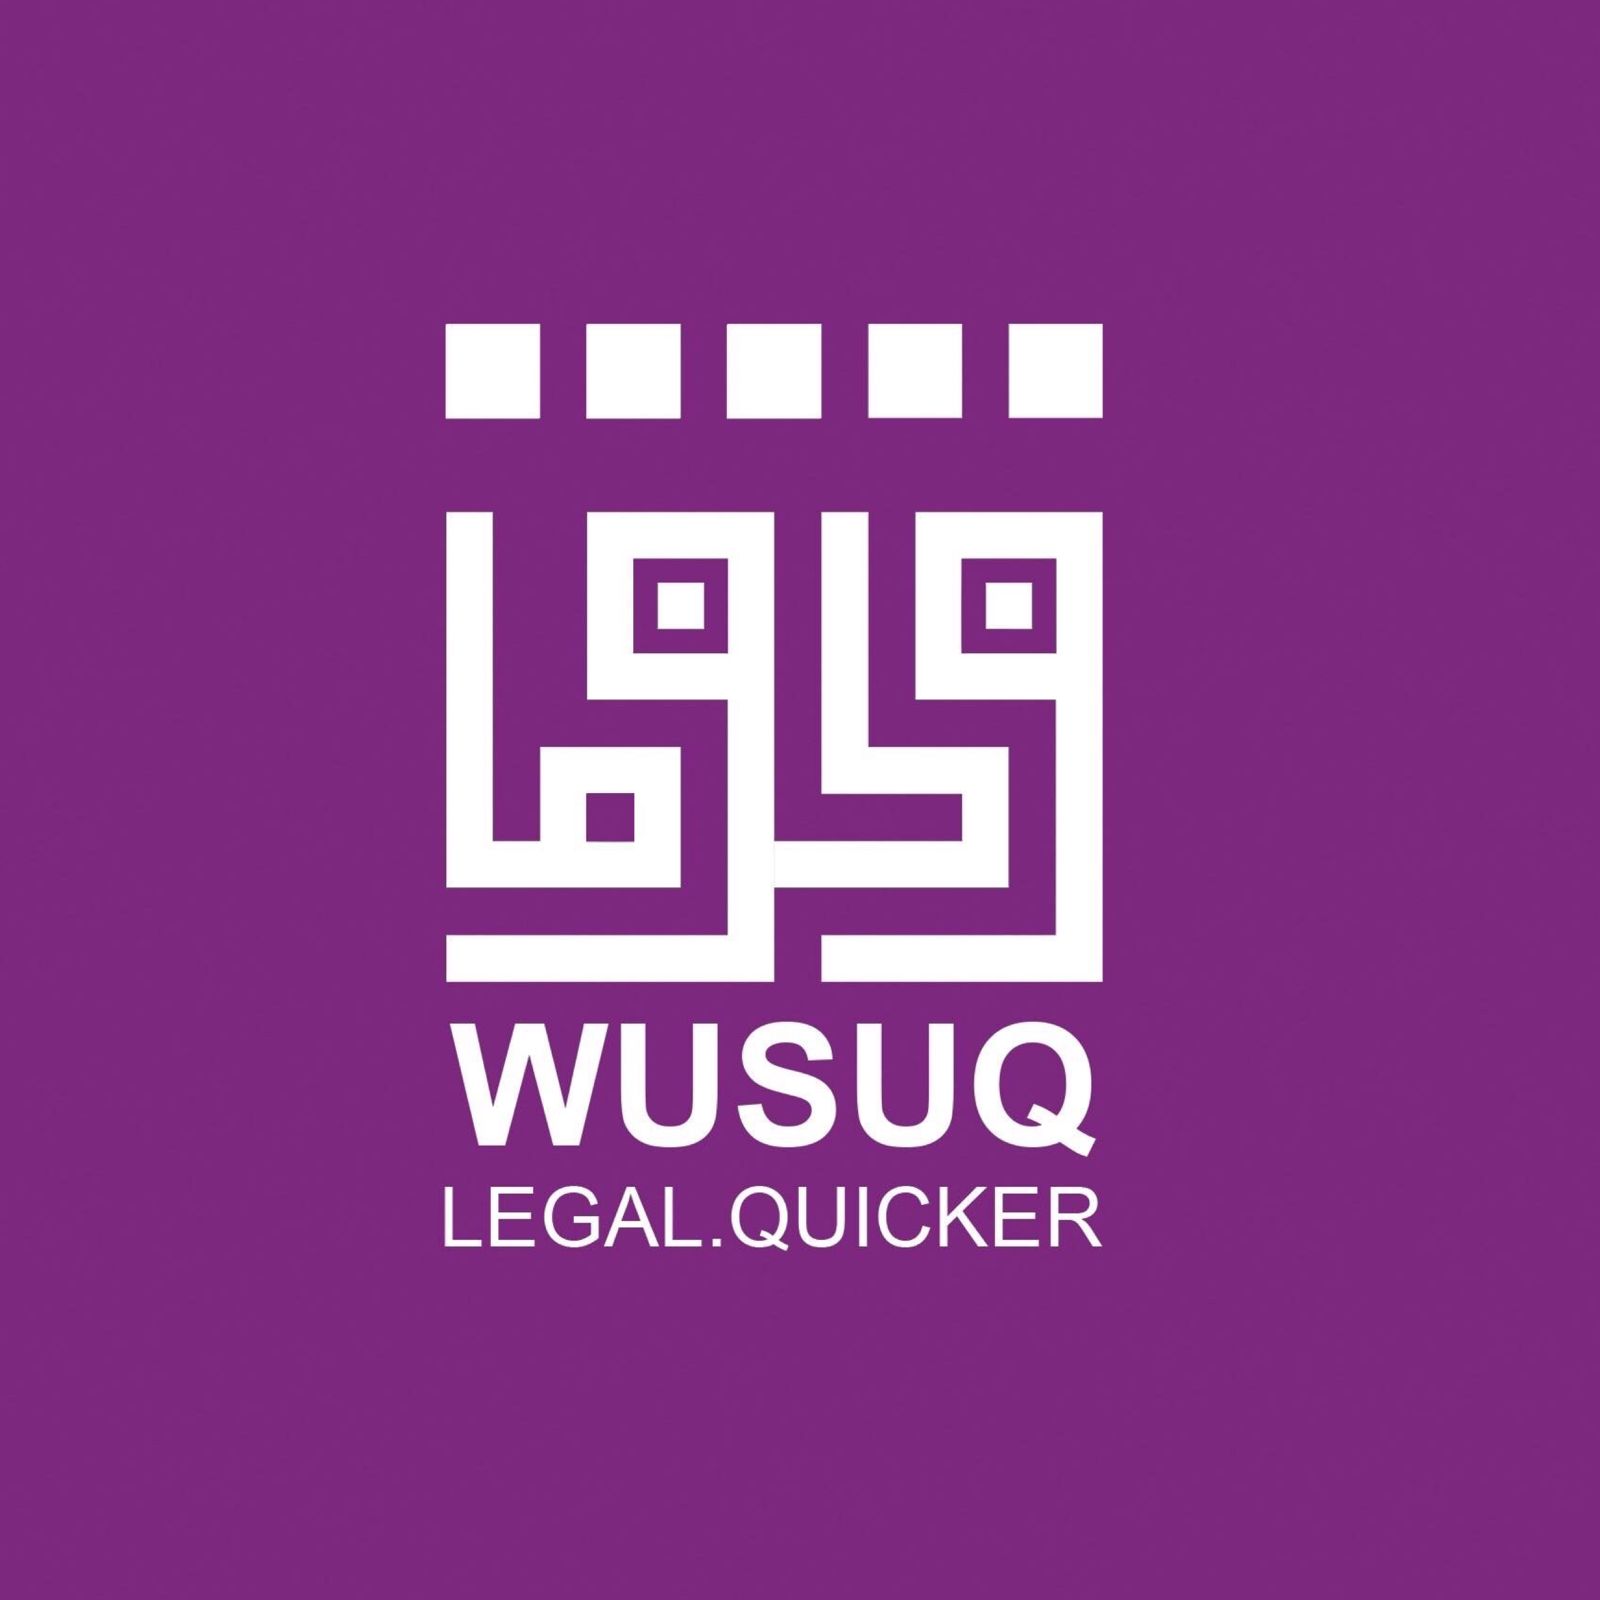 Wusuq - Legal.Quicker